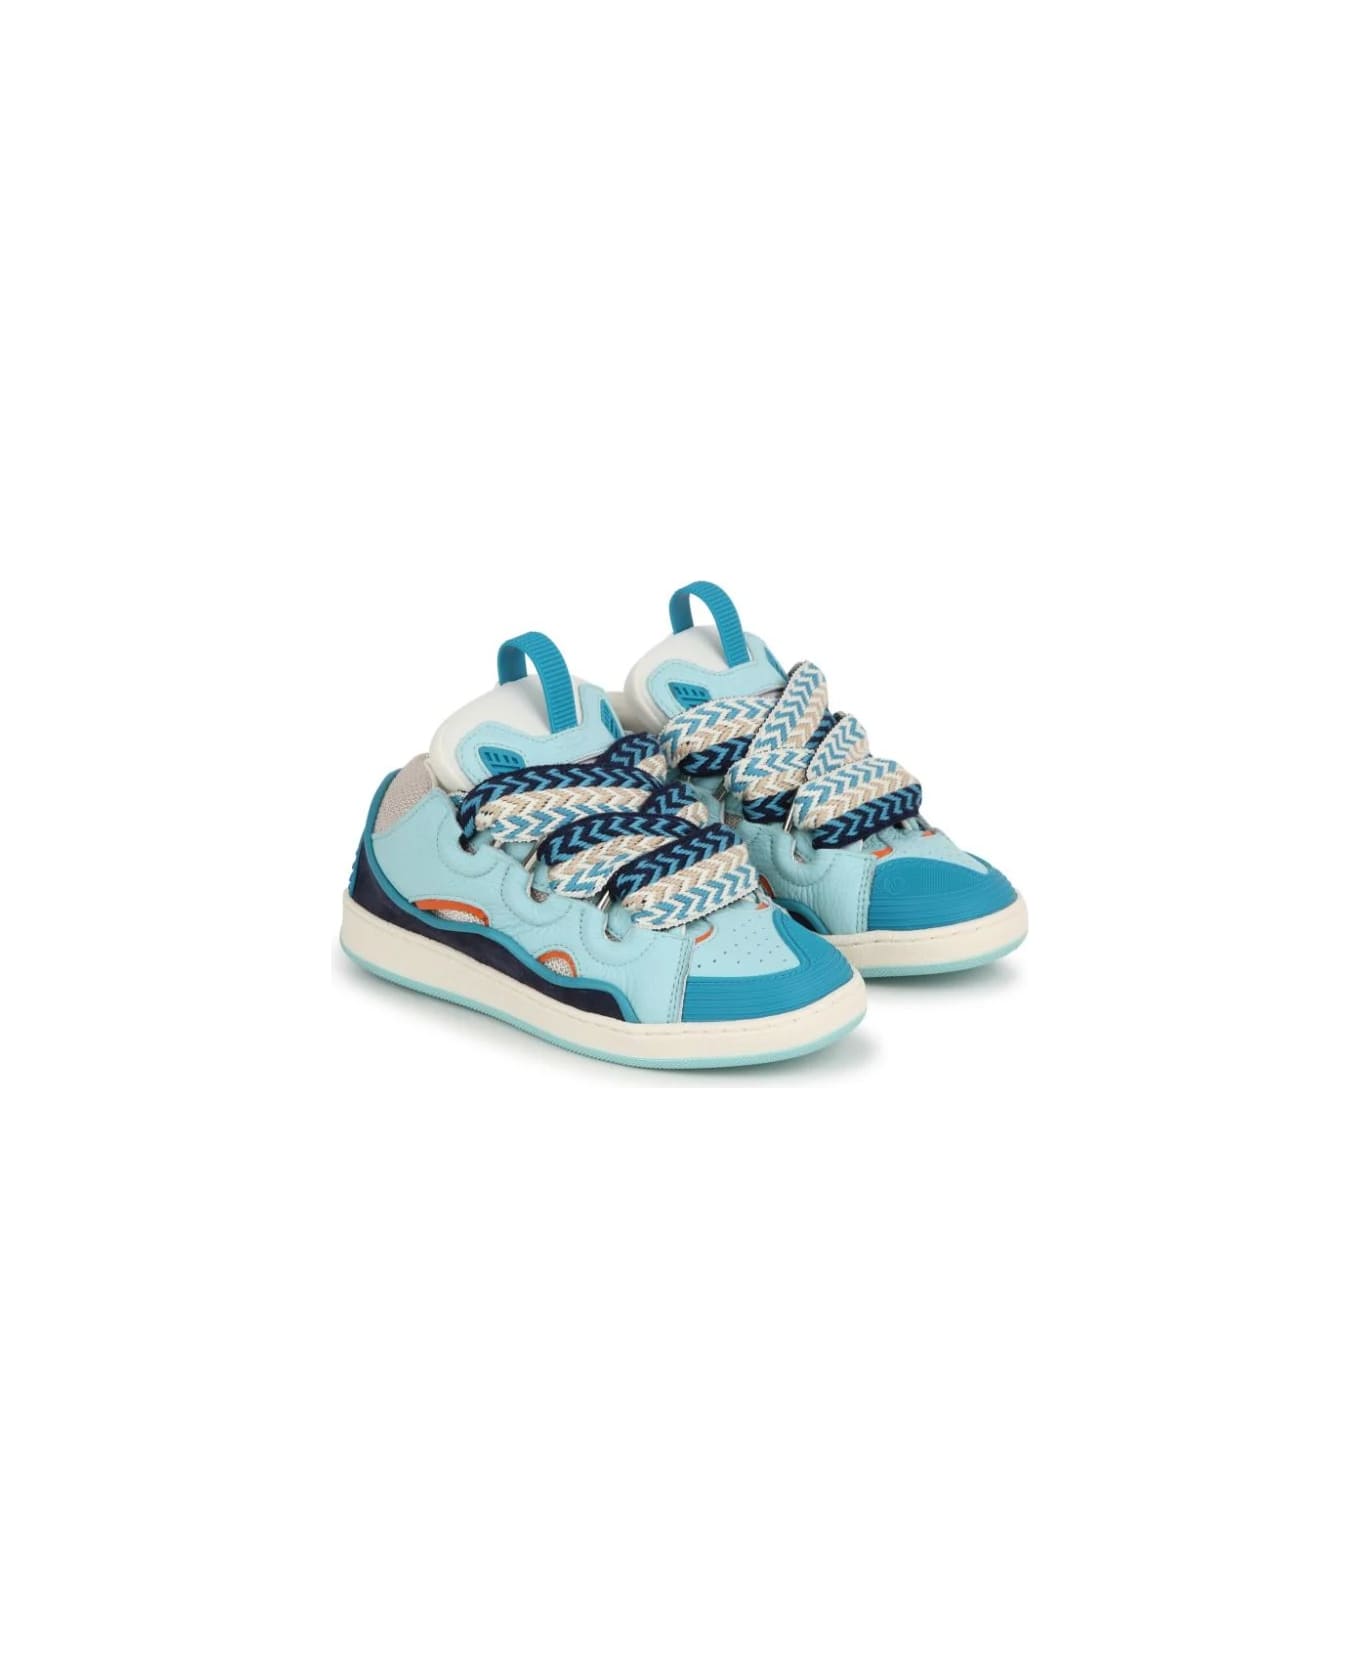 Lanvin Aquamarine Leather Curb Sneakers - Blue